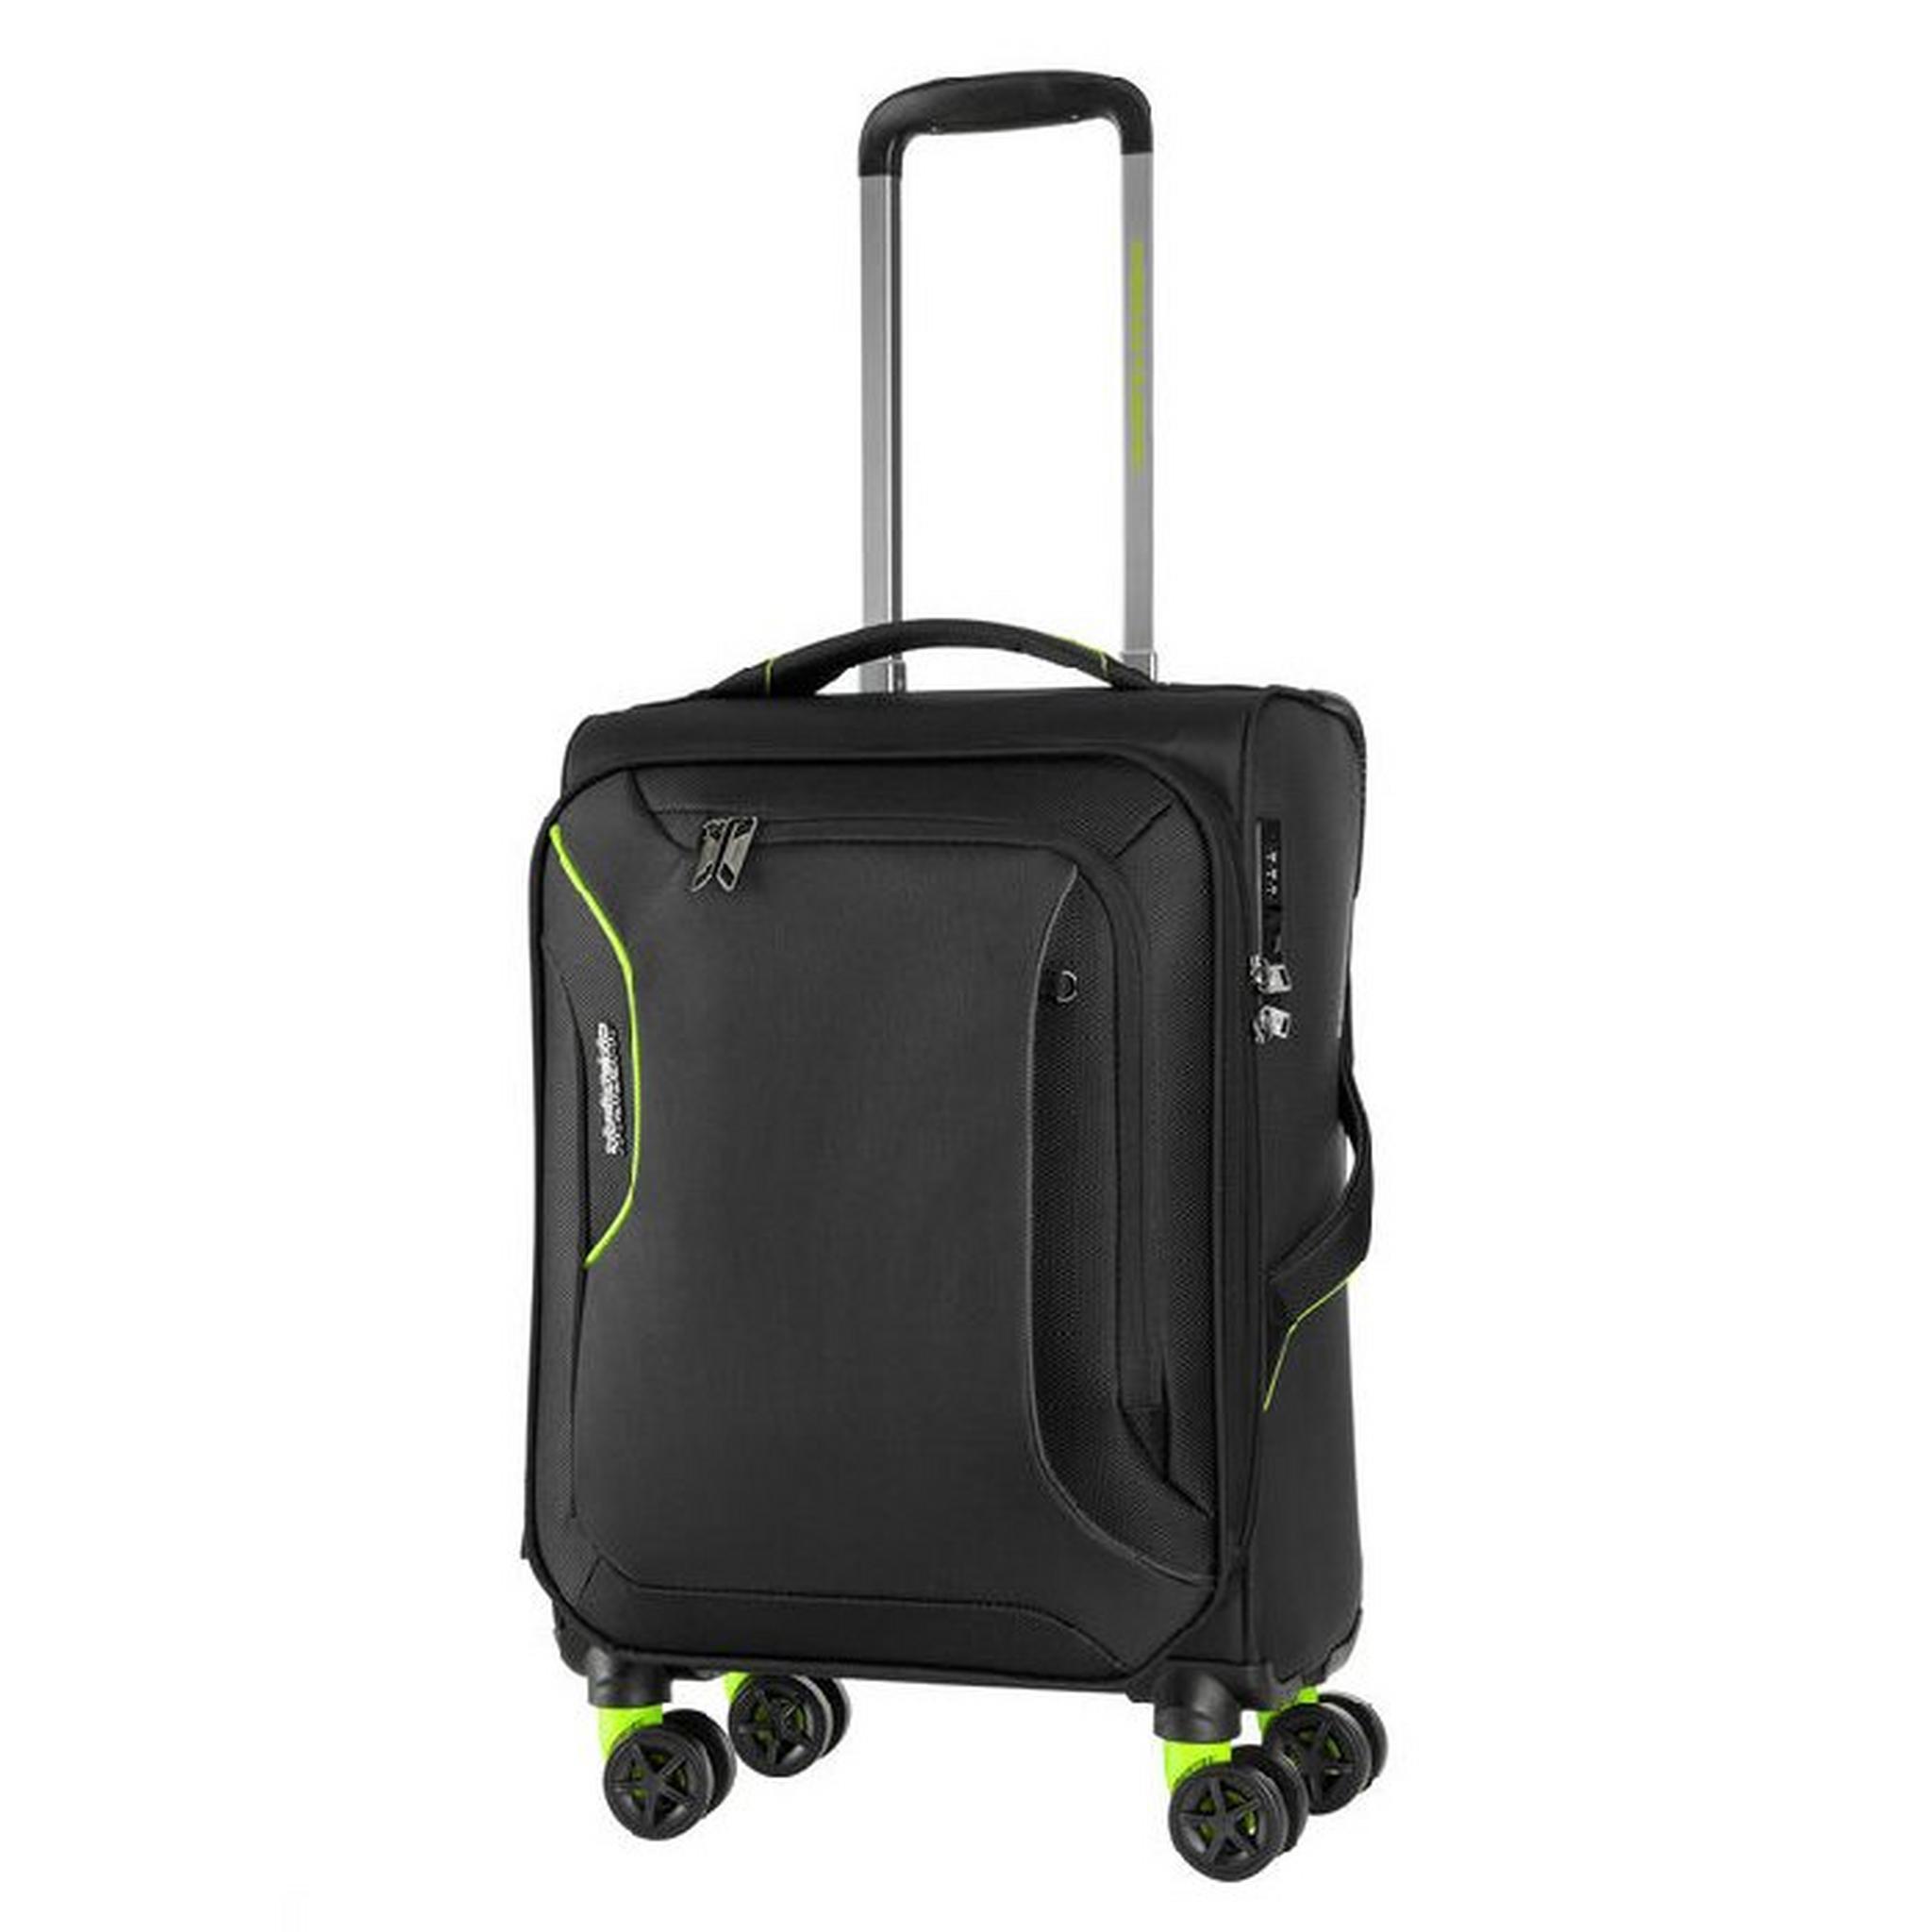 American Tourister Applite Soft Travel Bag, 55cm, DB7X49010 – Black